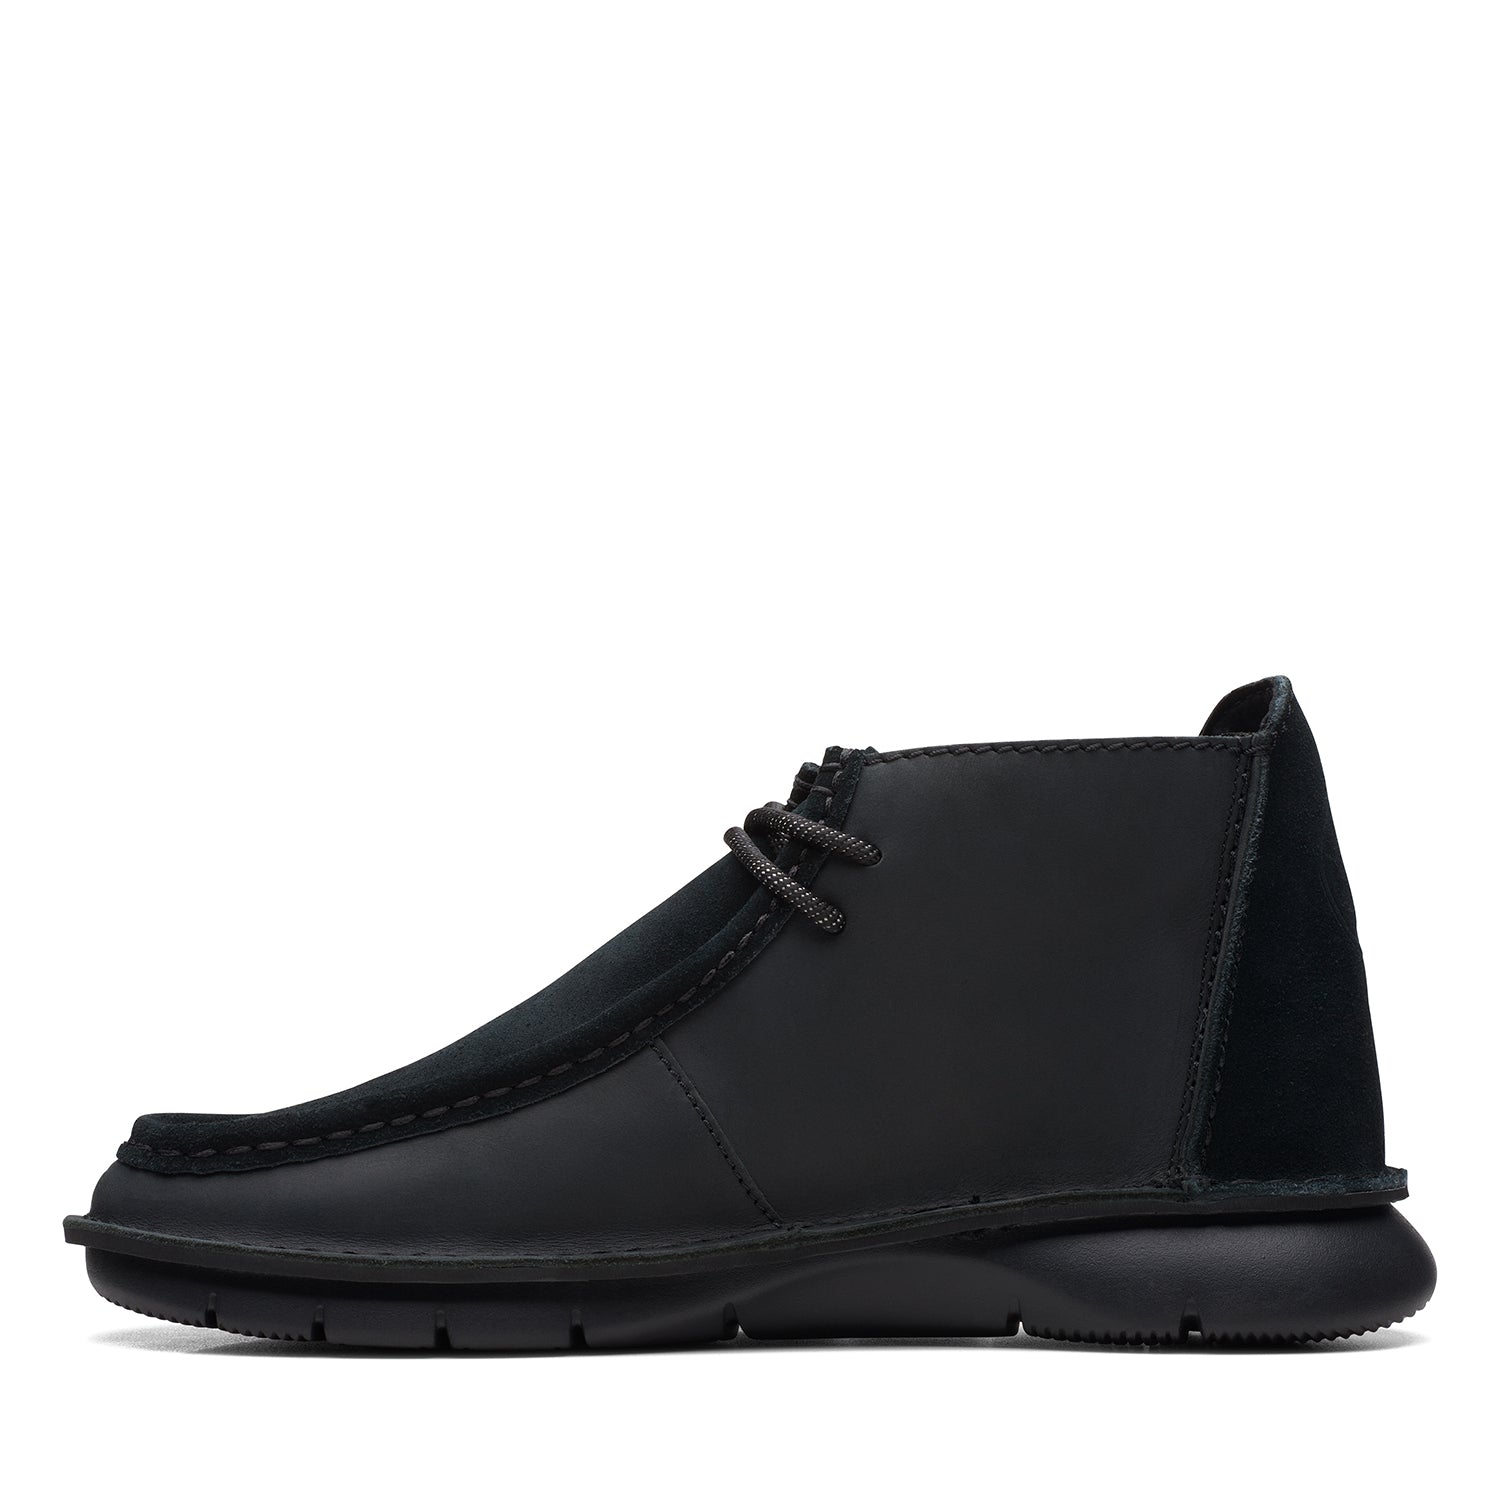 Clarks Colehill Wally Boots - Black Nubuck - 261677497 - G Width (Standard Fit)